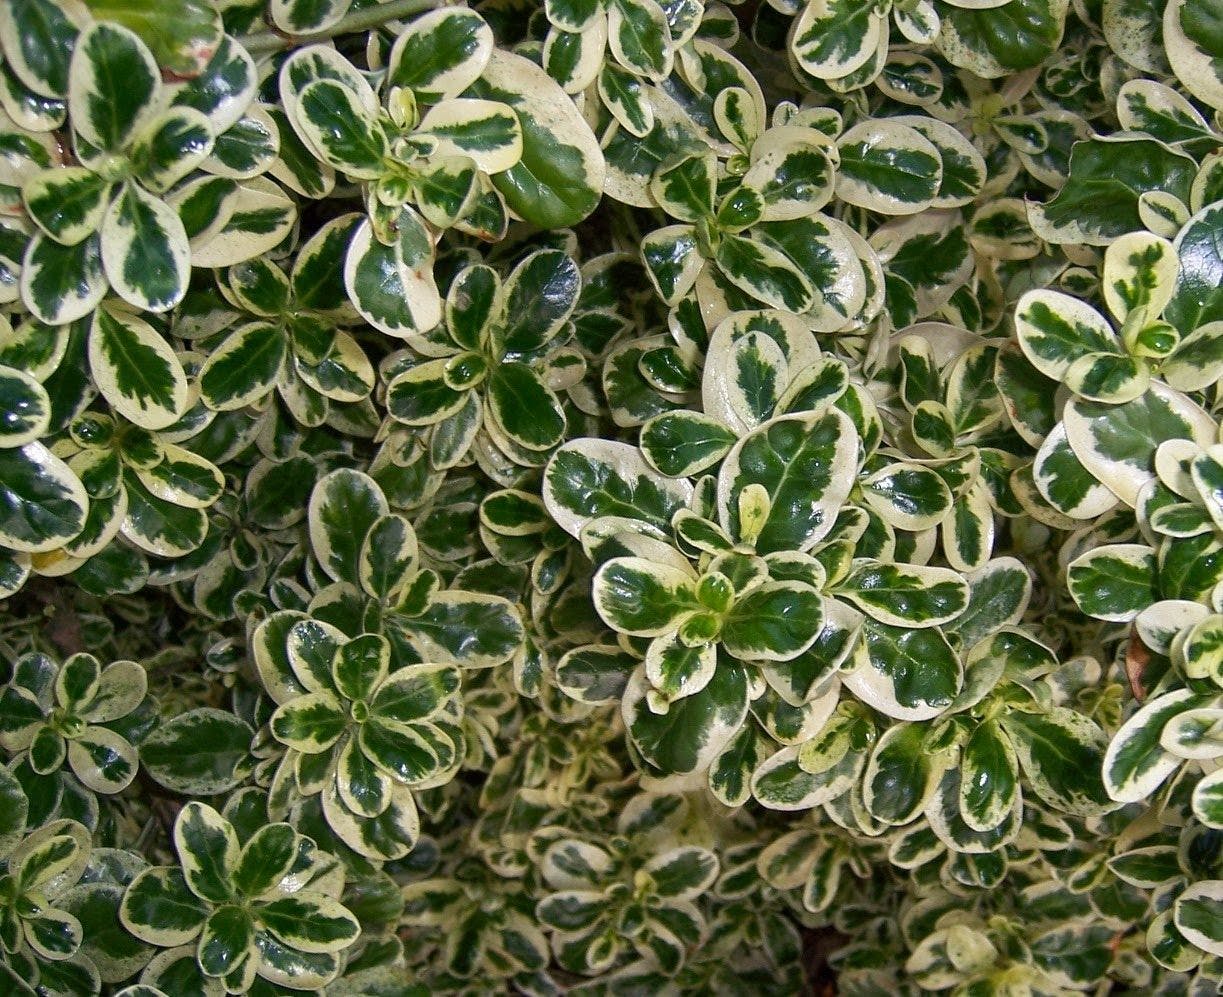 Coprosma's leaves